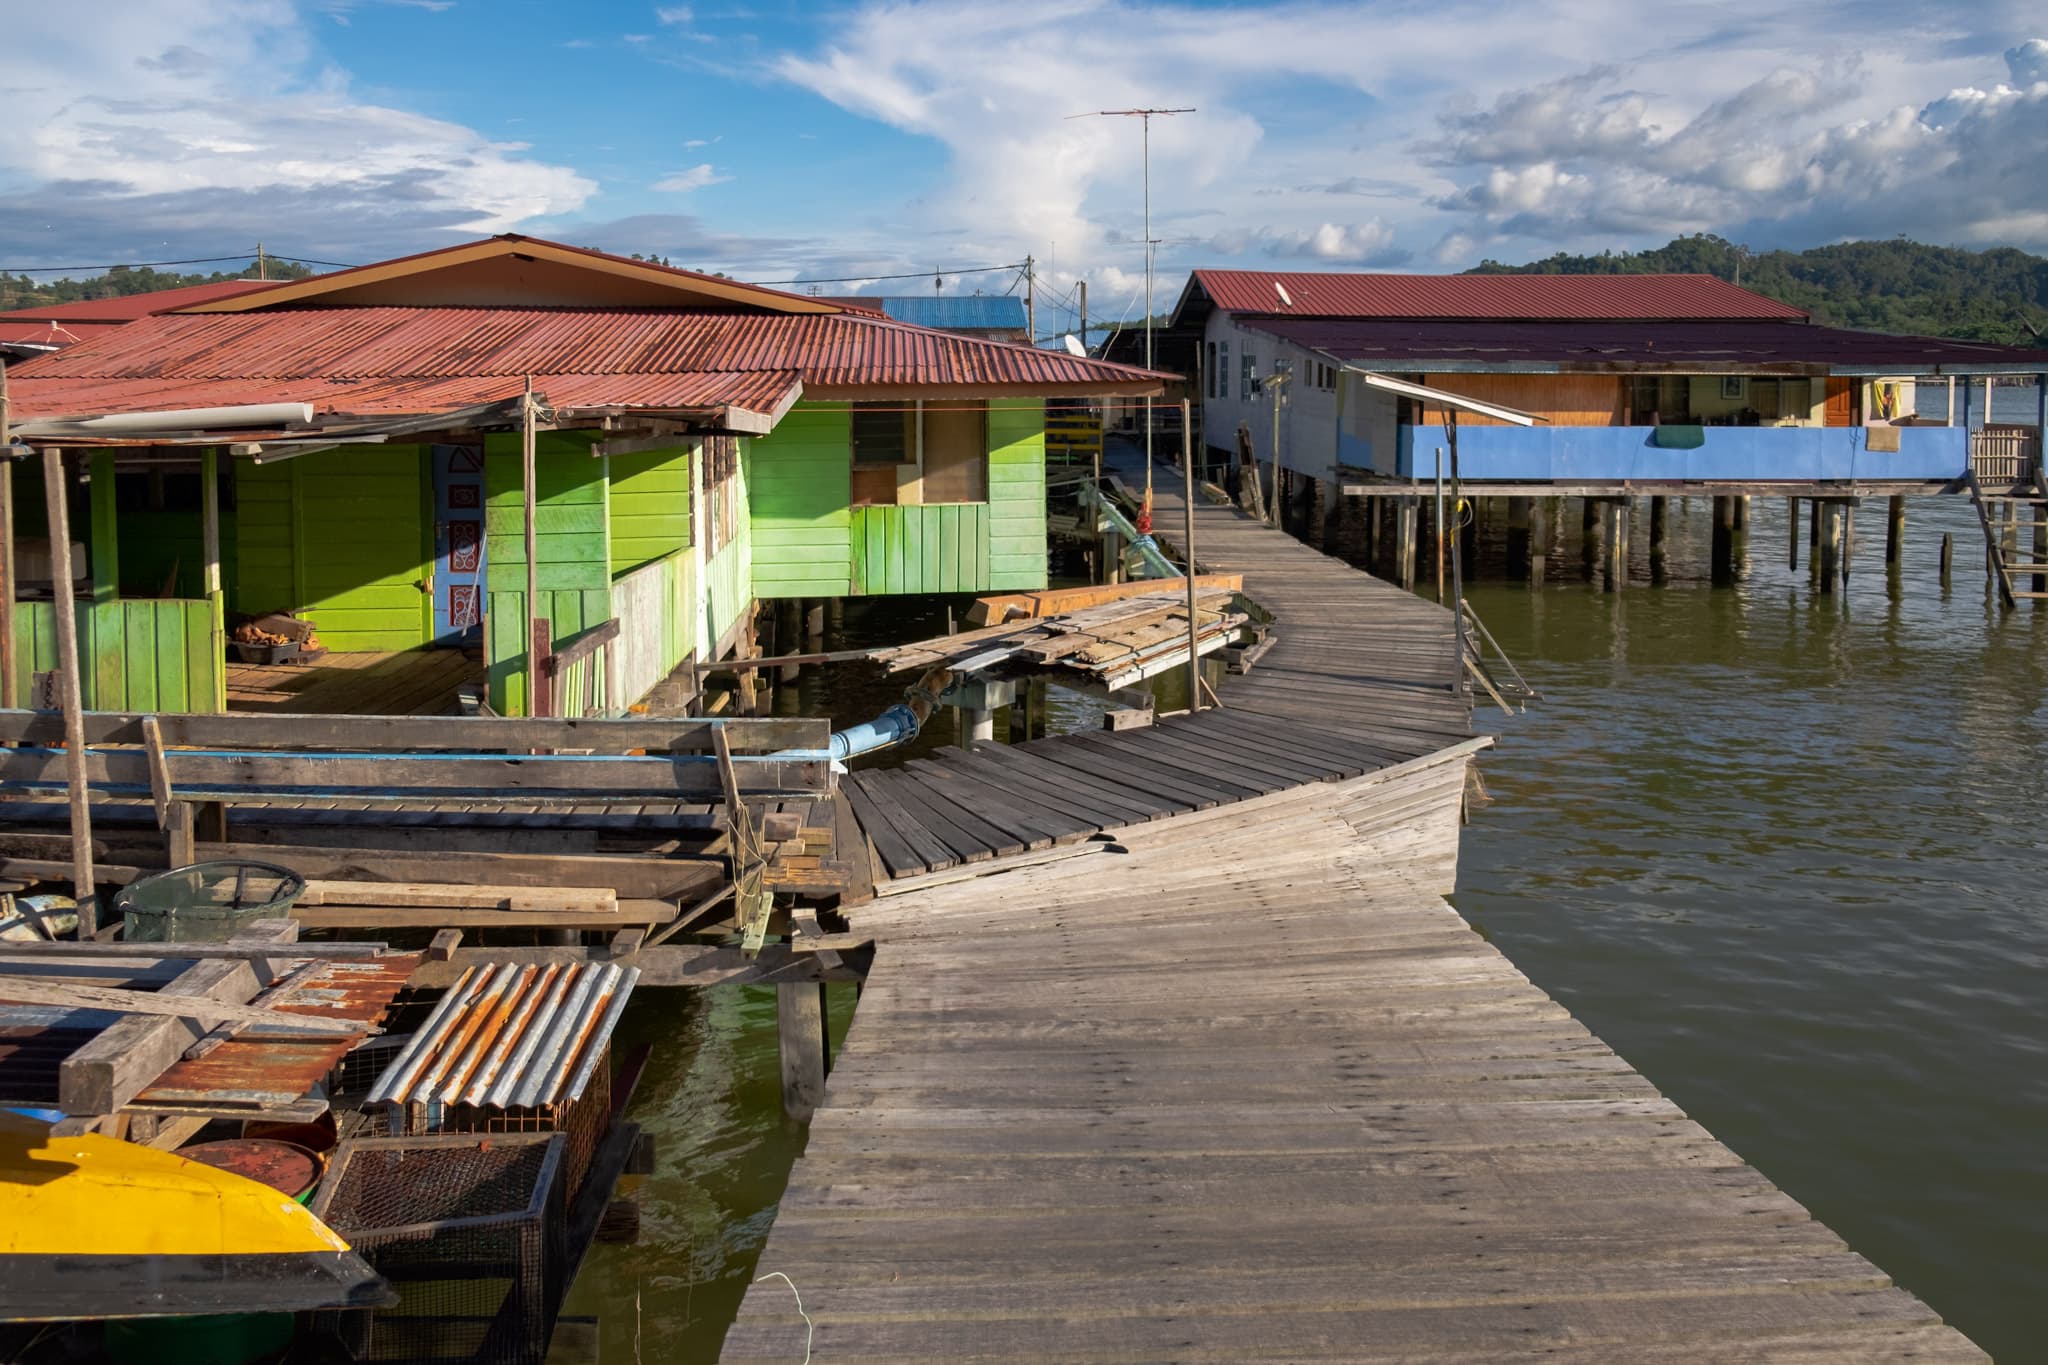 Traditional Bruneian stilt houses and wooden footpaths in Kampong Ayer (Water Village) on the Brunei River. Bandar Seri Begawan, Brunei.